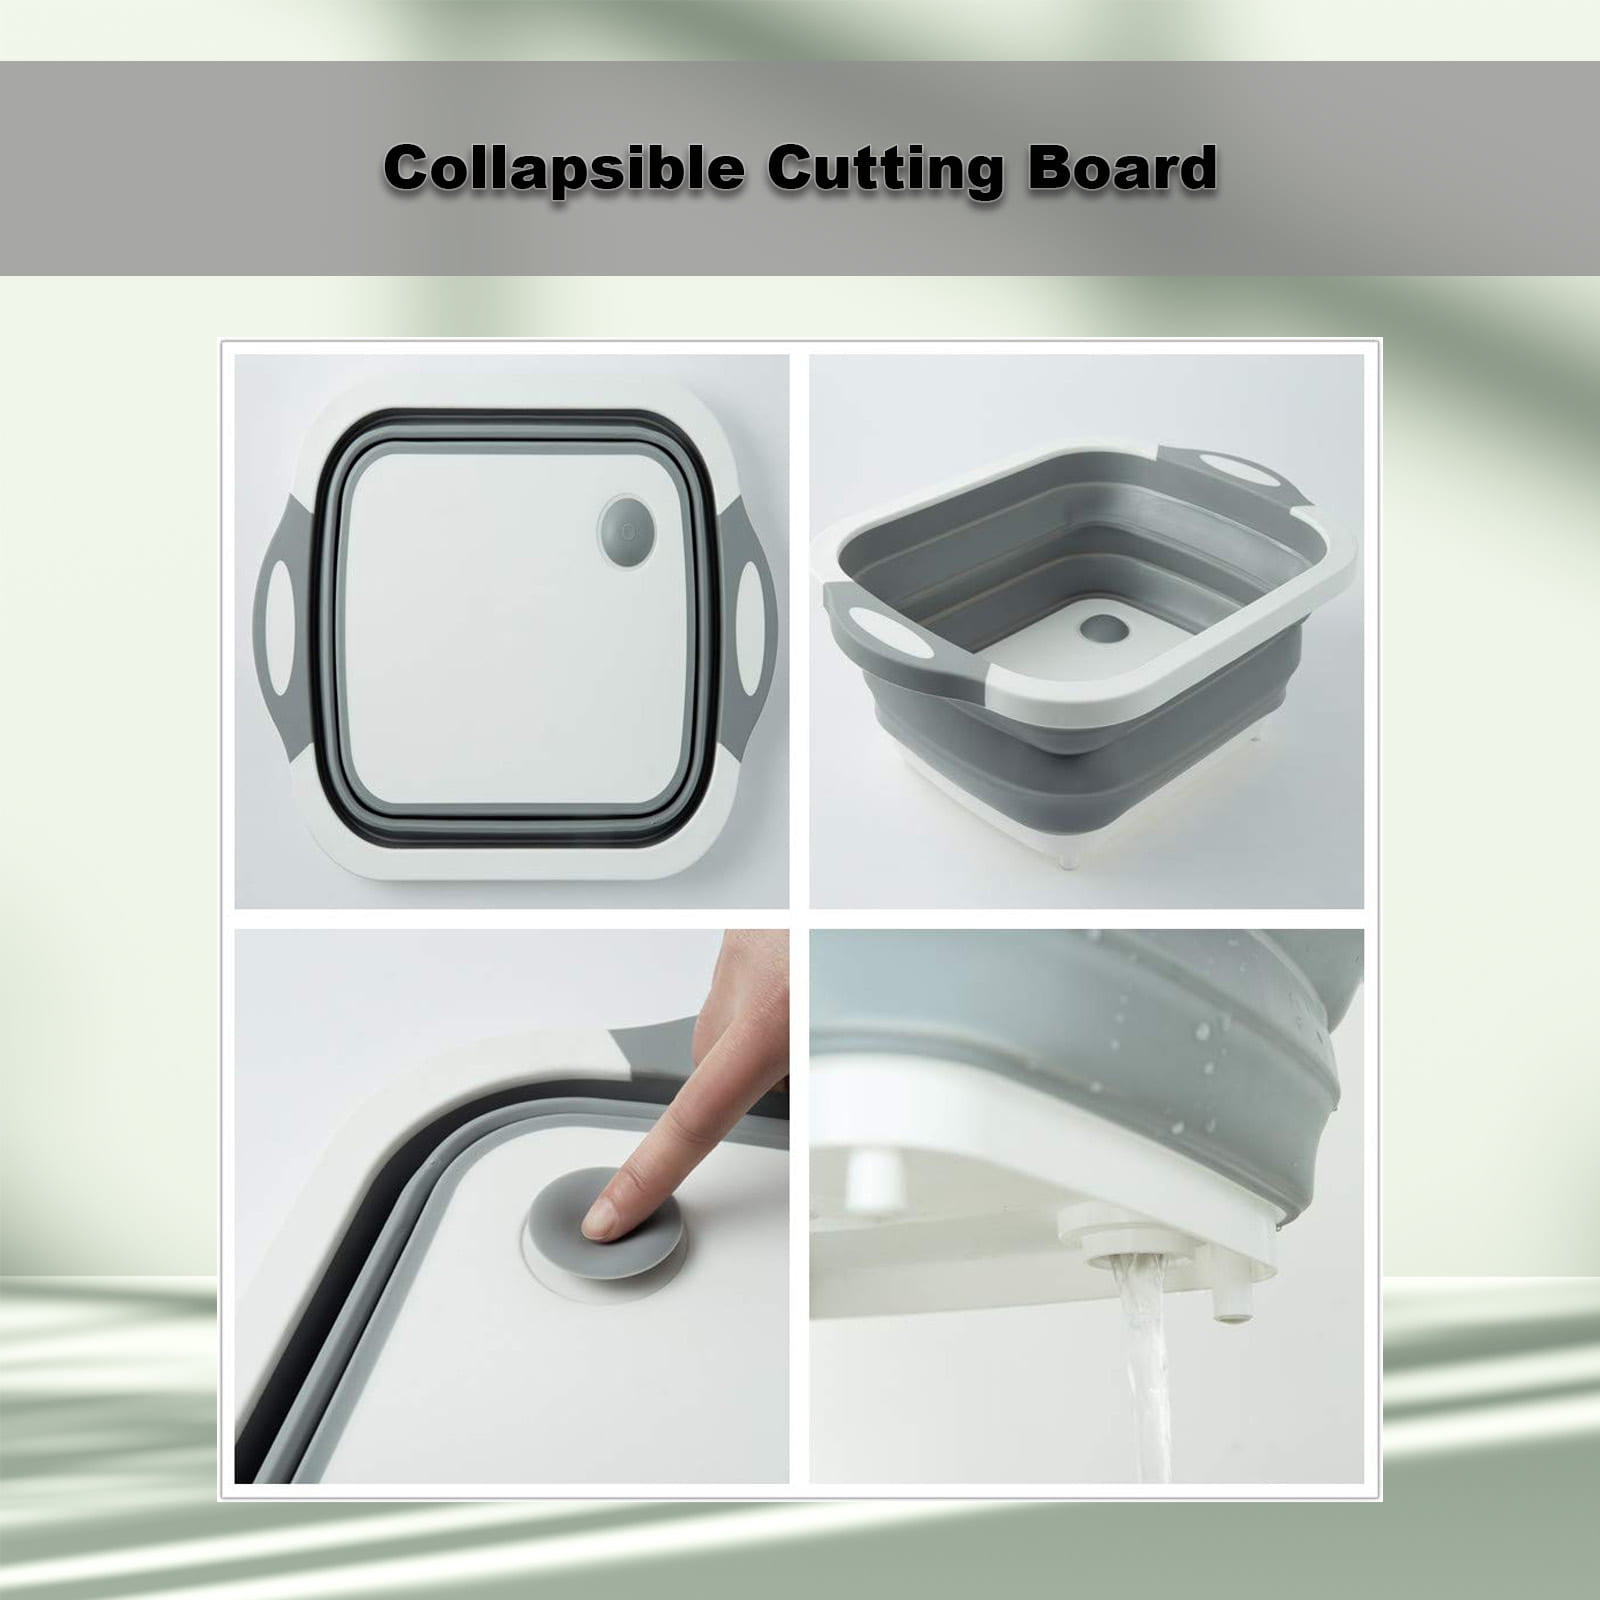 Bueautybox Rinse & Strainer Foldable Cutting Board, Veggies & Fruit Cutting Board, BPA-Free Plastic Multifunctional Cutting Board Mat, Size: 42.5